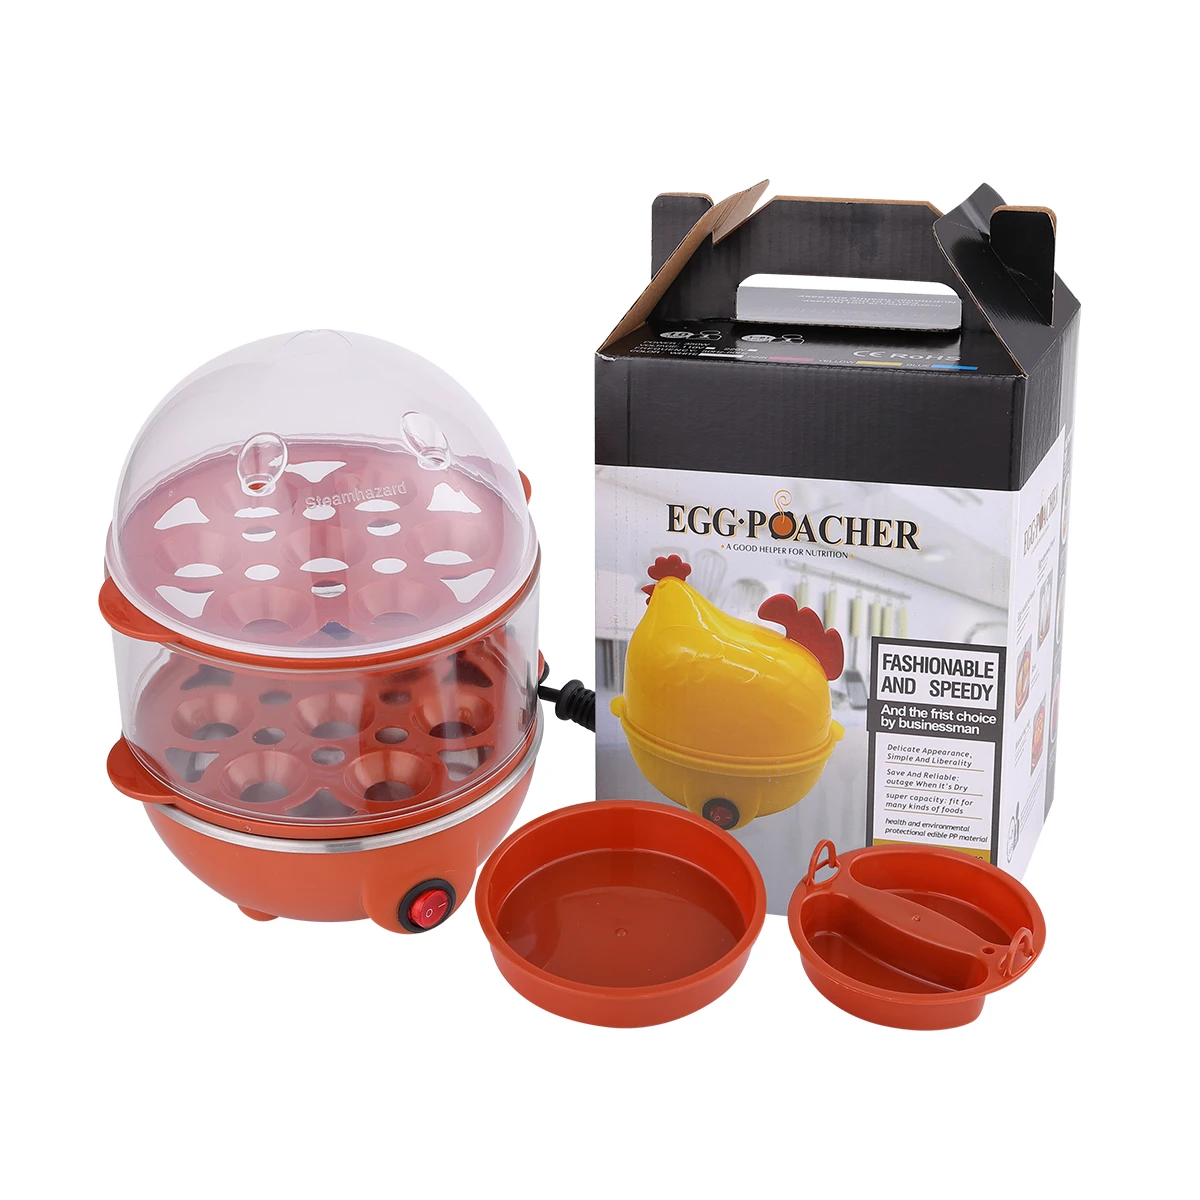 Amazon choice boiled eggs plastic steamer repaid egg cooker 6 eggs